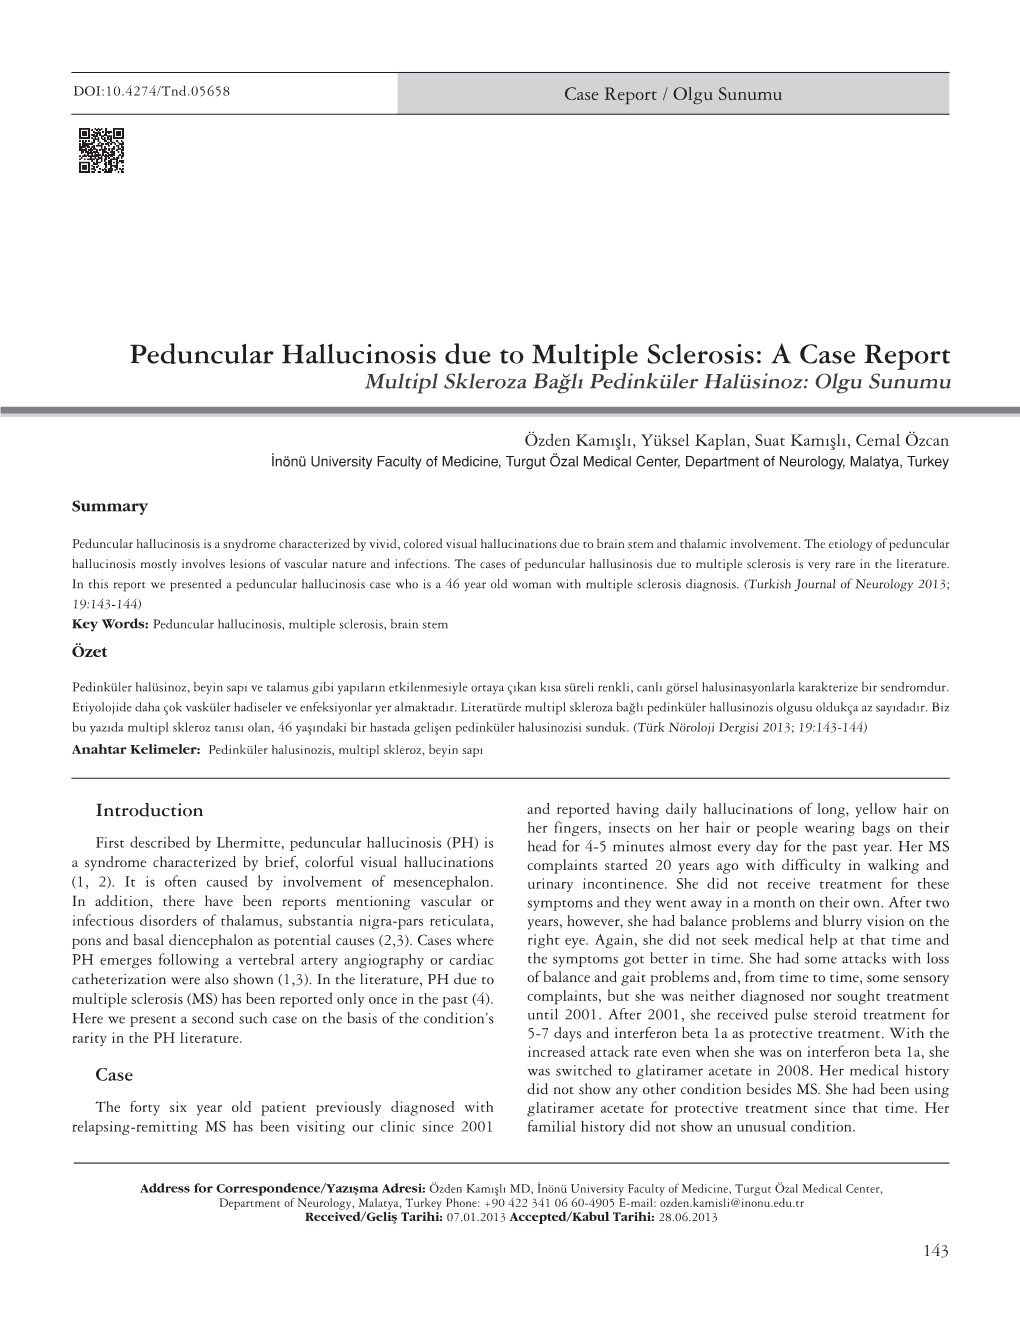 Peduncular Hallucinosis Due to Multiple Sclerosis: a Case Report Multipl Skleroza Bağlı Pedinküler Halüsinoz: Olgu Sunumu